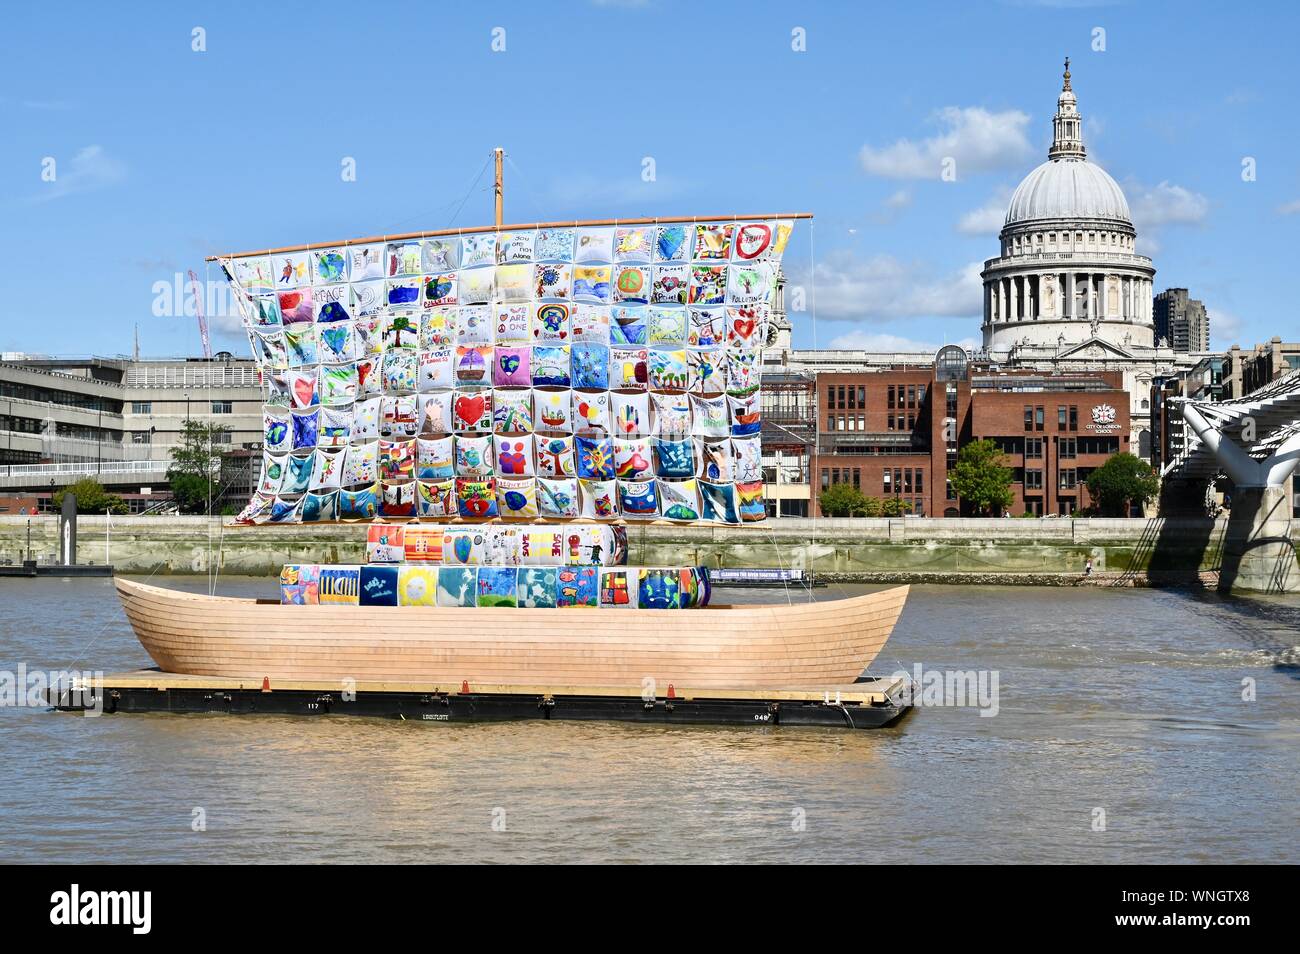 The Ship of Tolerance by Ilya and Emiia Kabakov, Tate Modern, London. UK Stock Photo